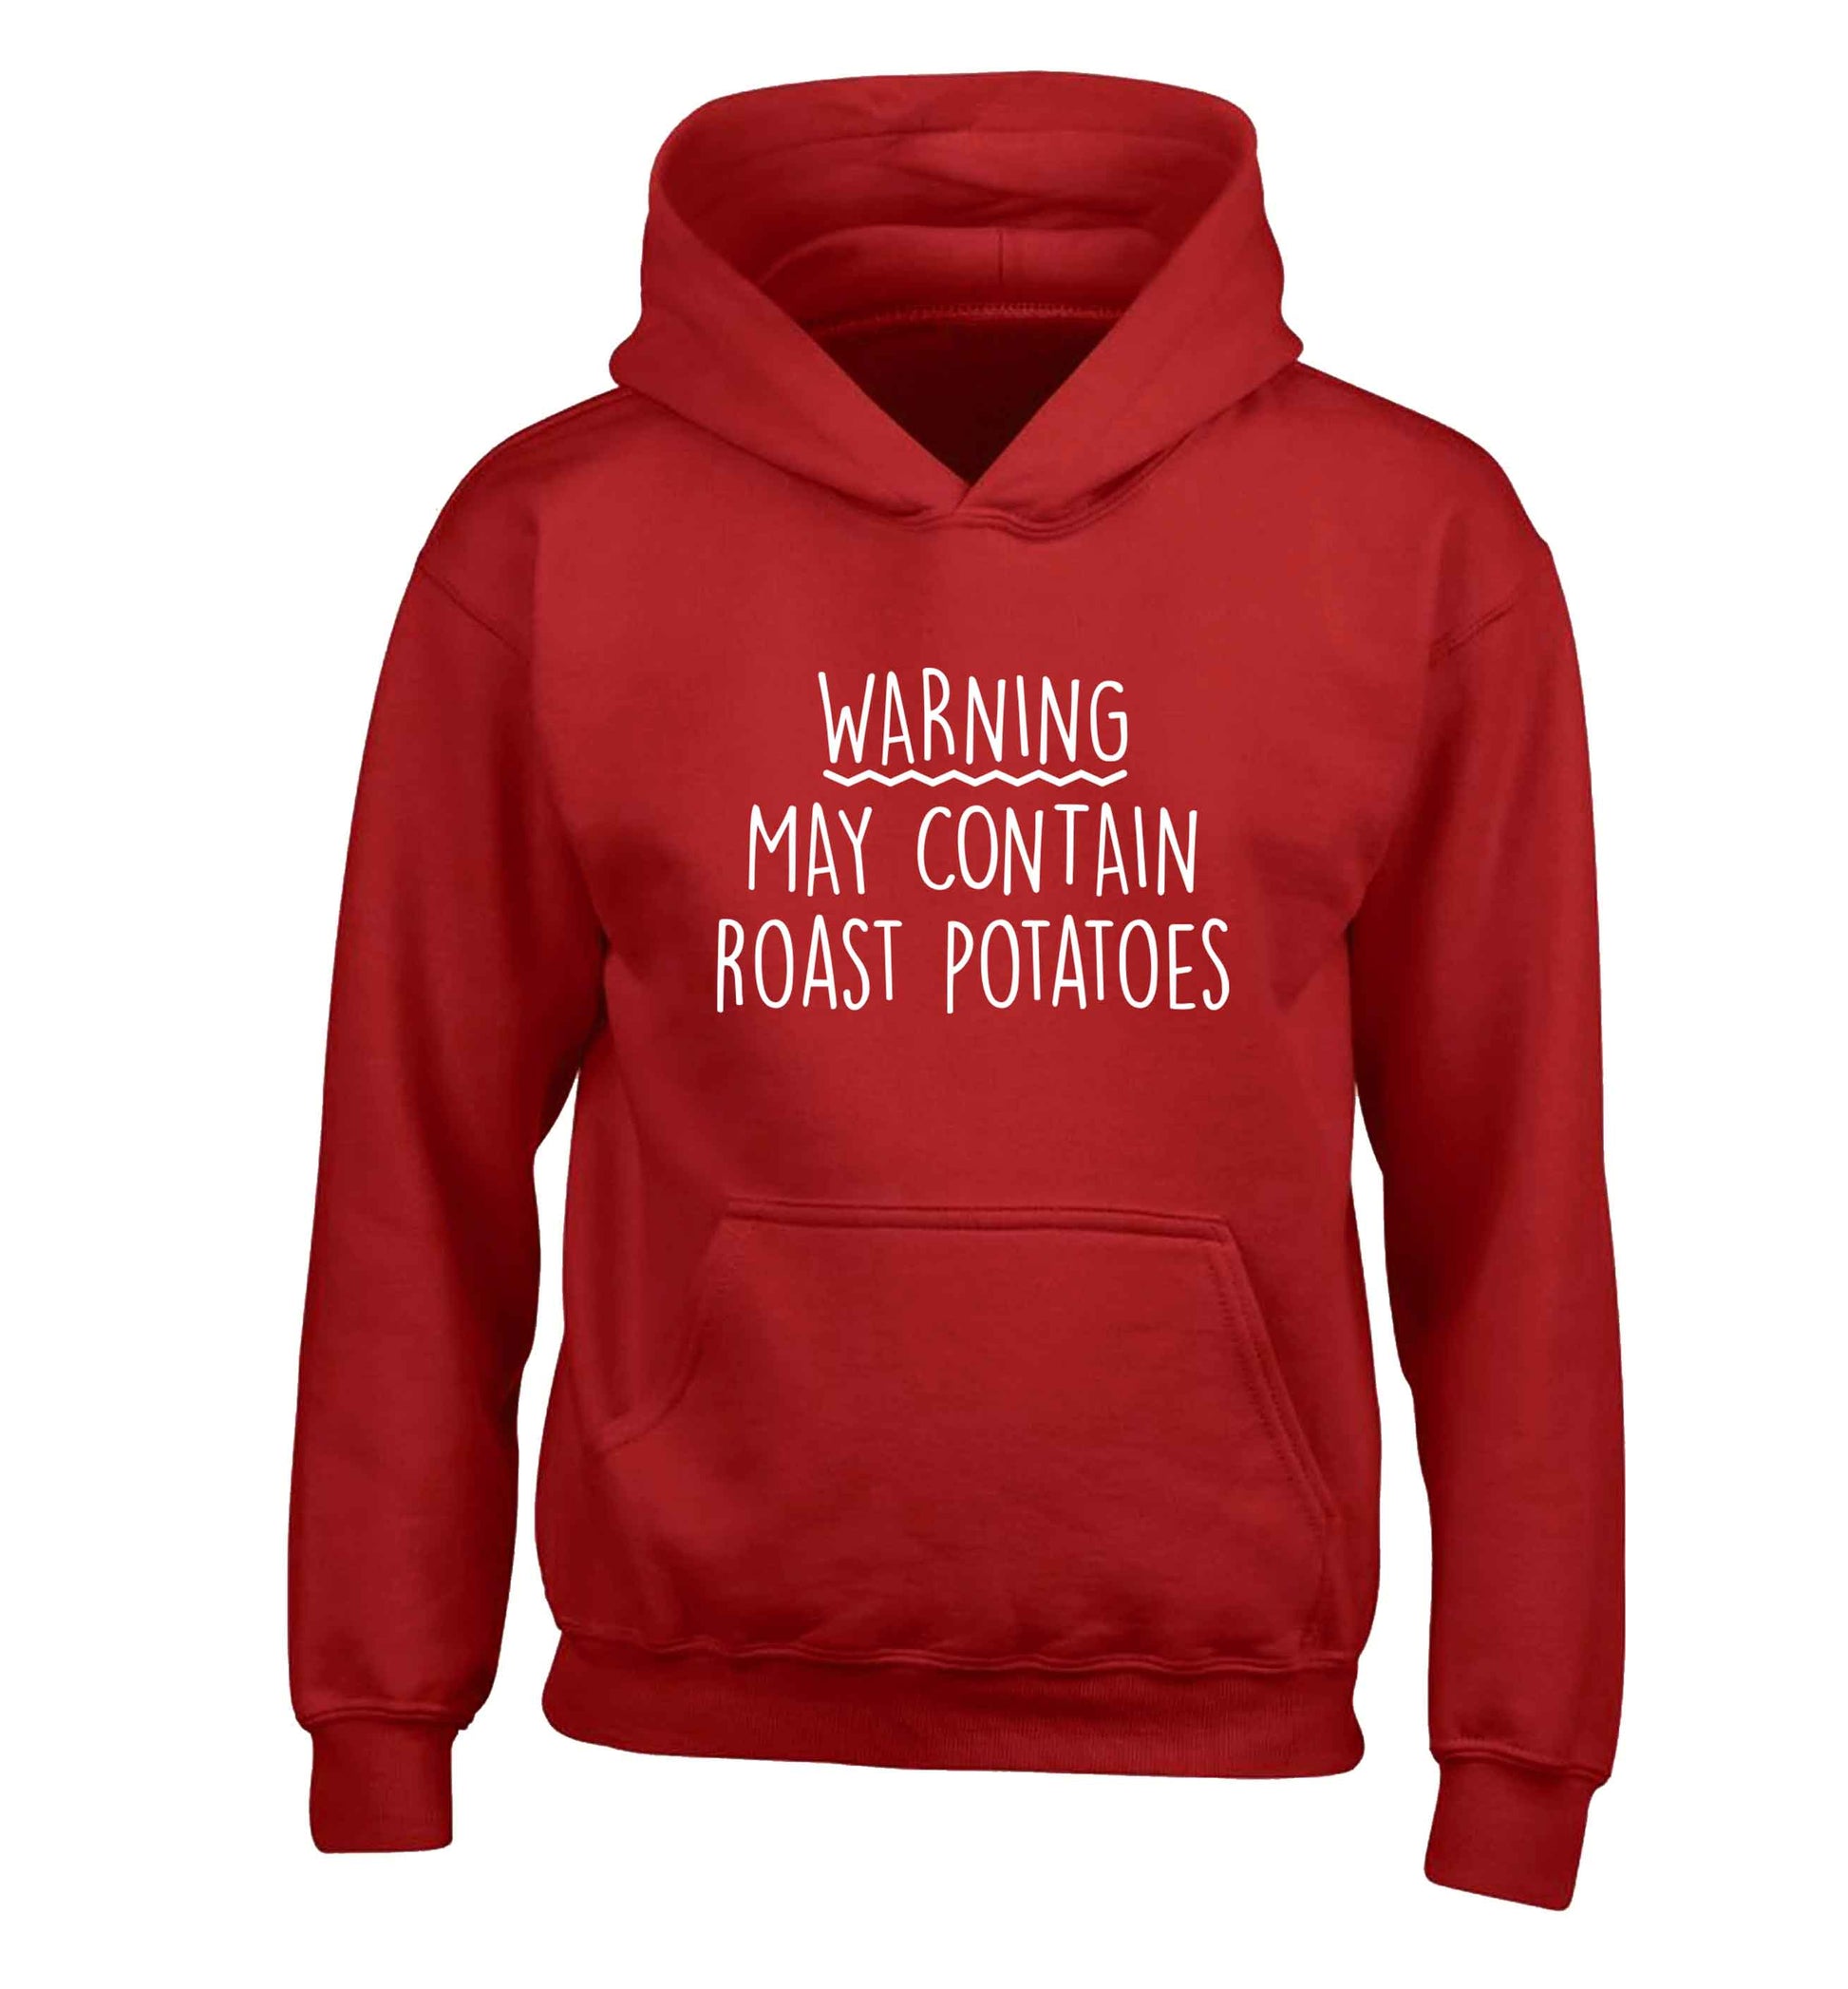 Warning may containg roast potatoes children's red hoodie 12-13 Years